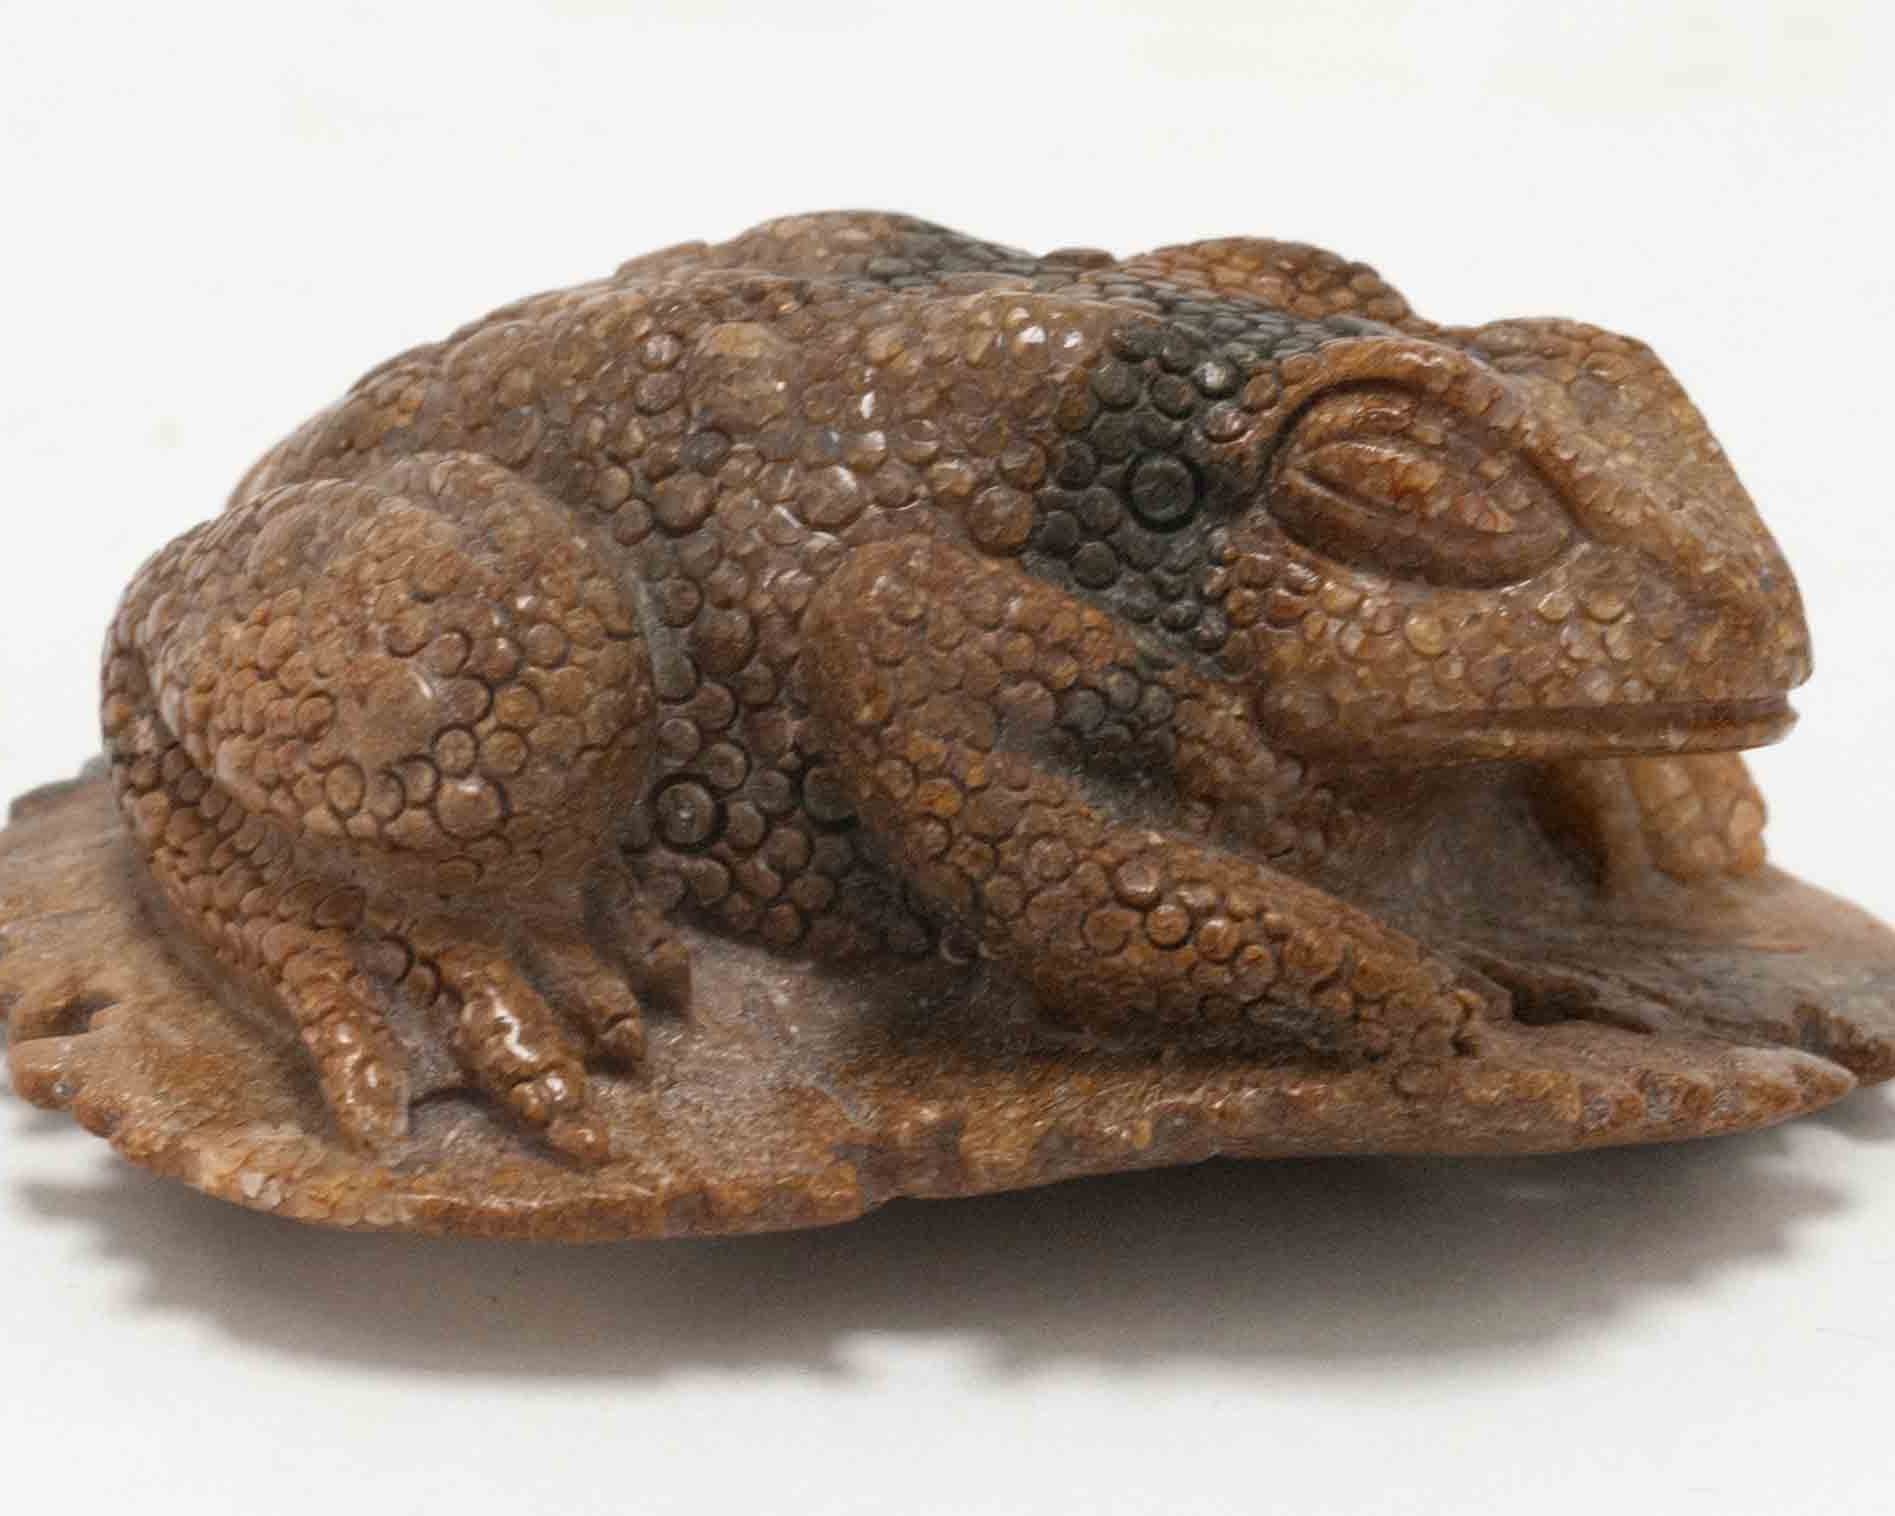 A frog carved from a piece of whale bone found on the Gaviota, CA coastline.